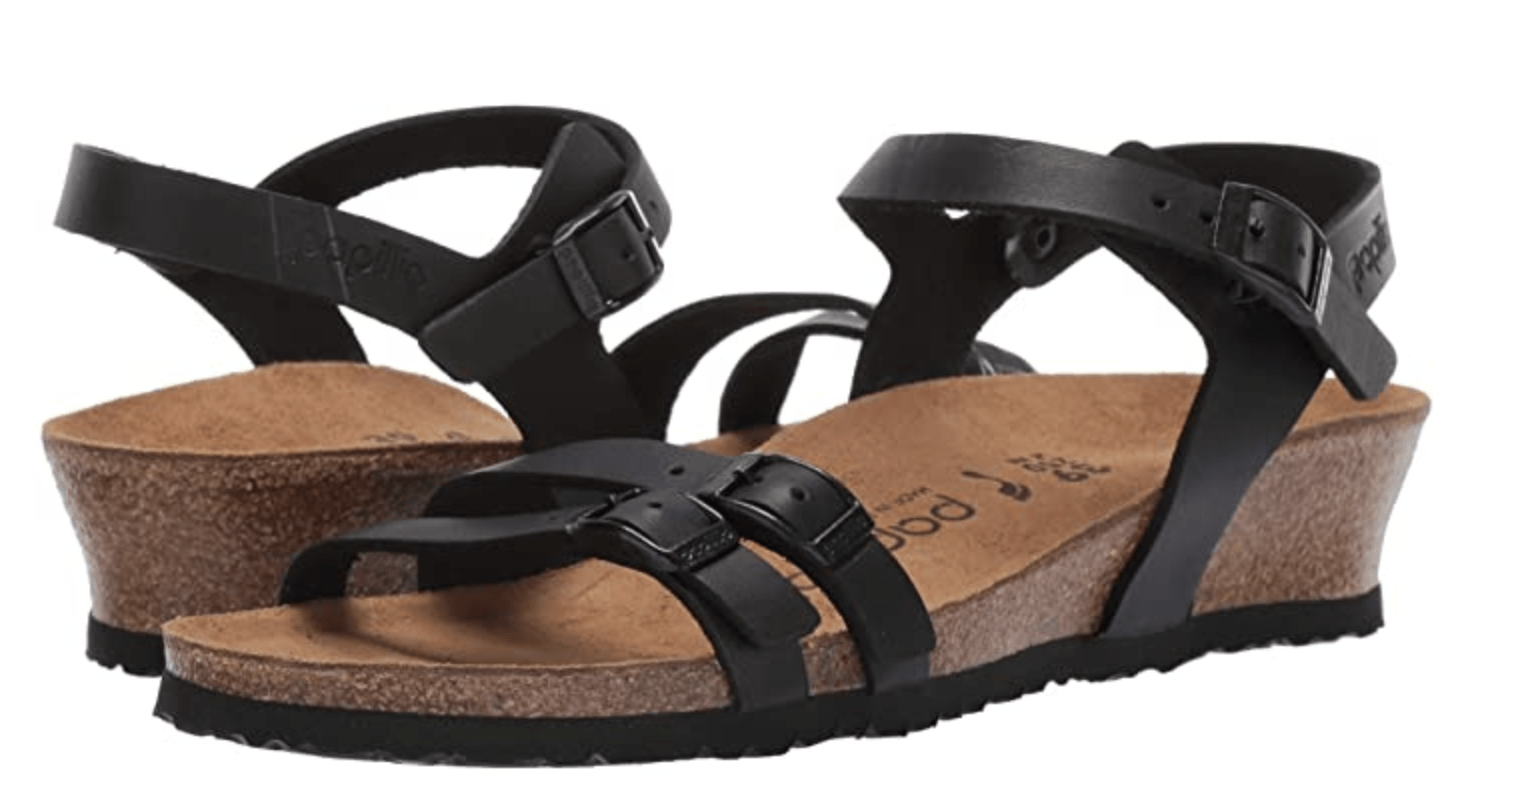 birkenstocks sandals sale